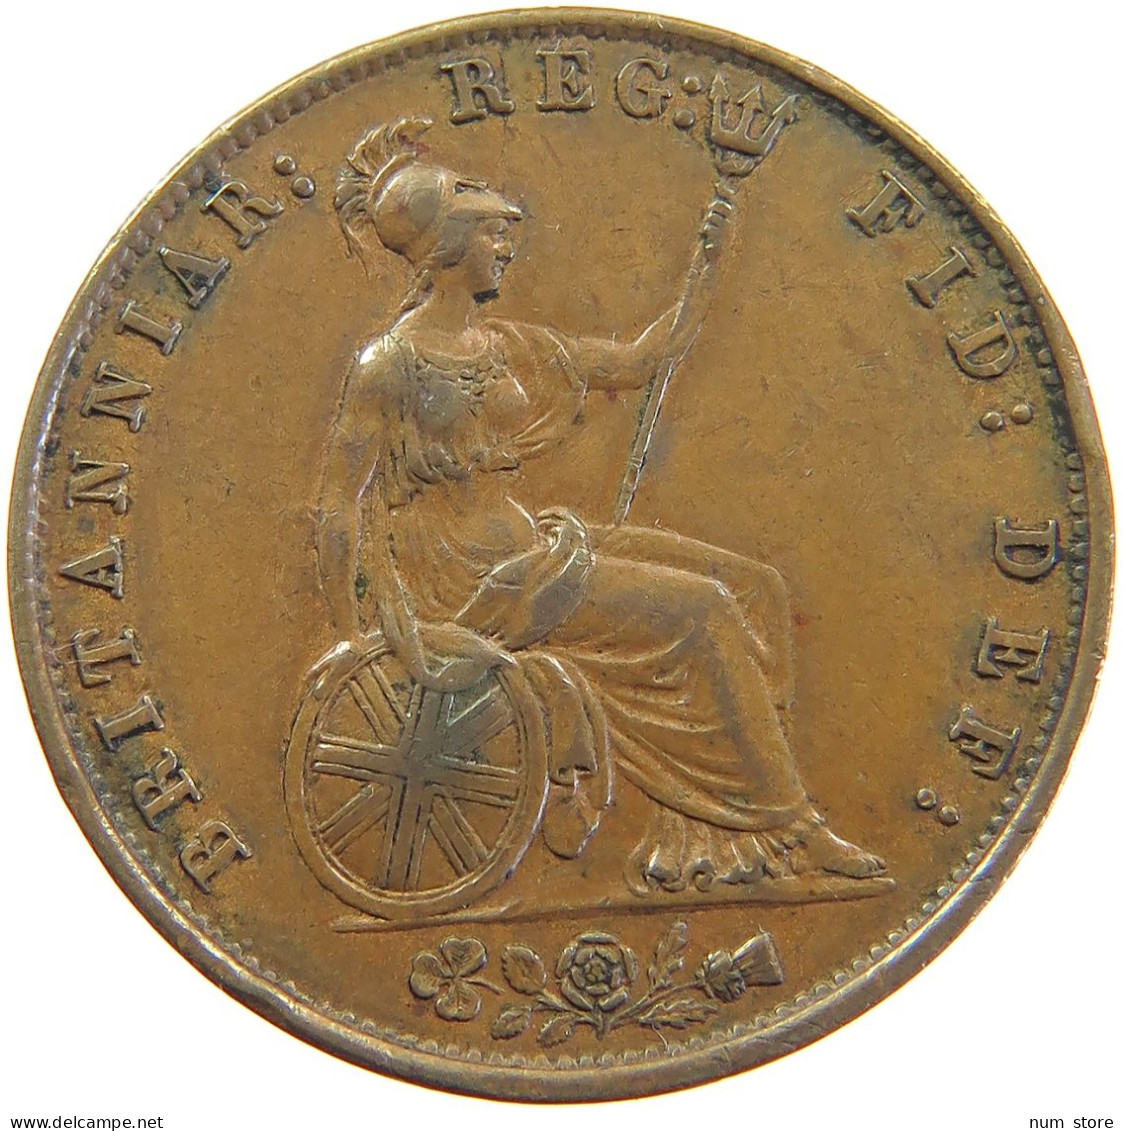 GREAT BRITAIN HALFPENNY 1858 Victoria 1837-1901 #t020 0323 - C. 1/2 Penny